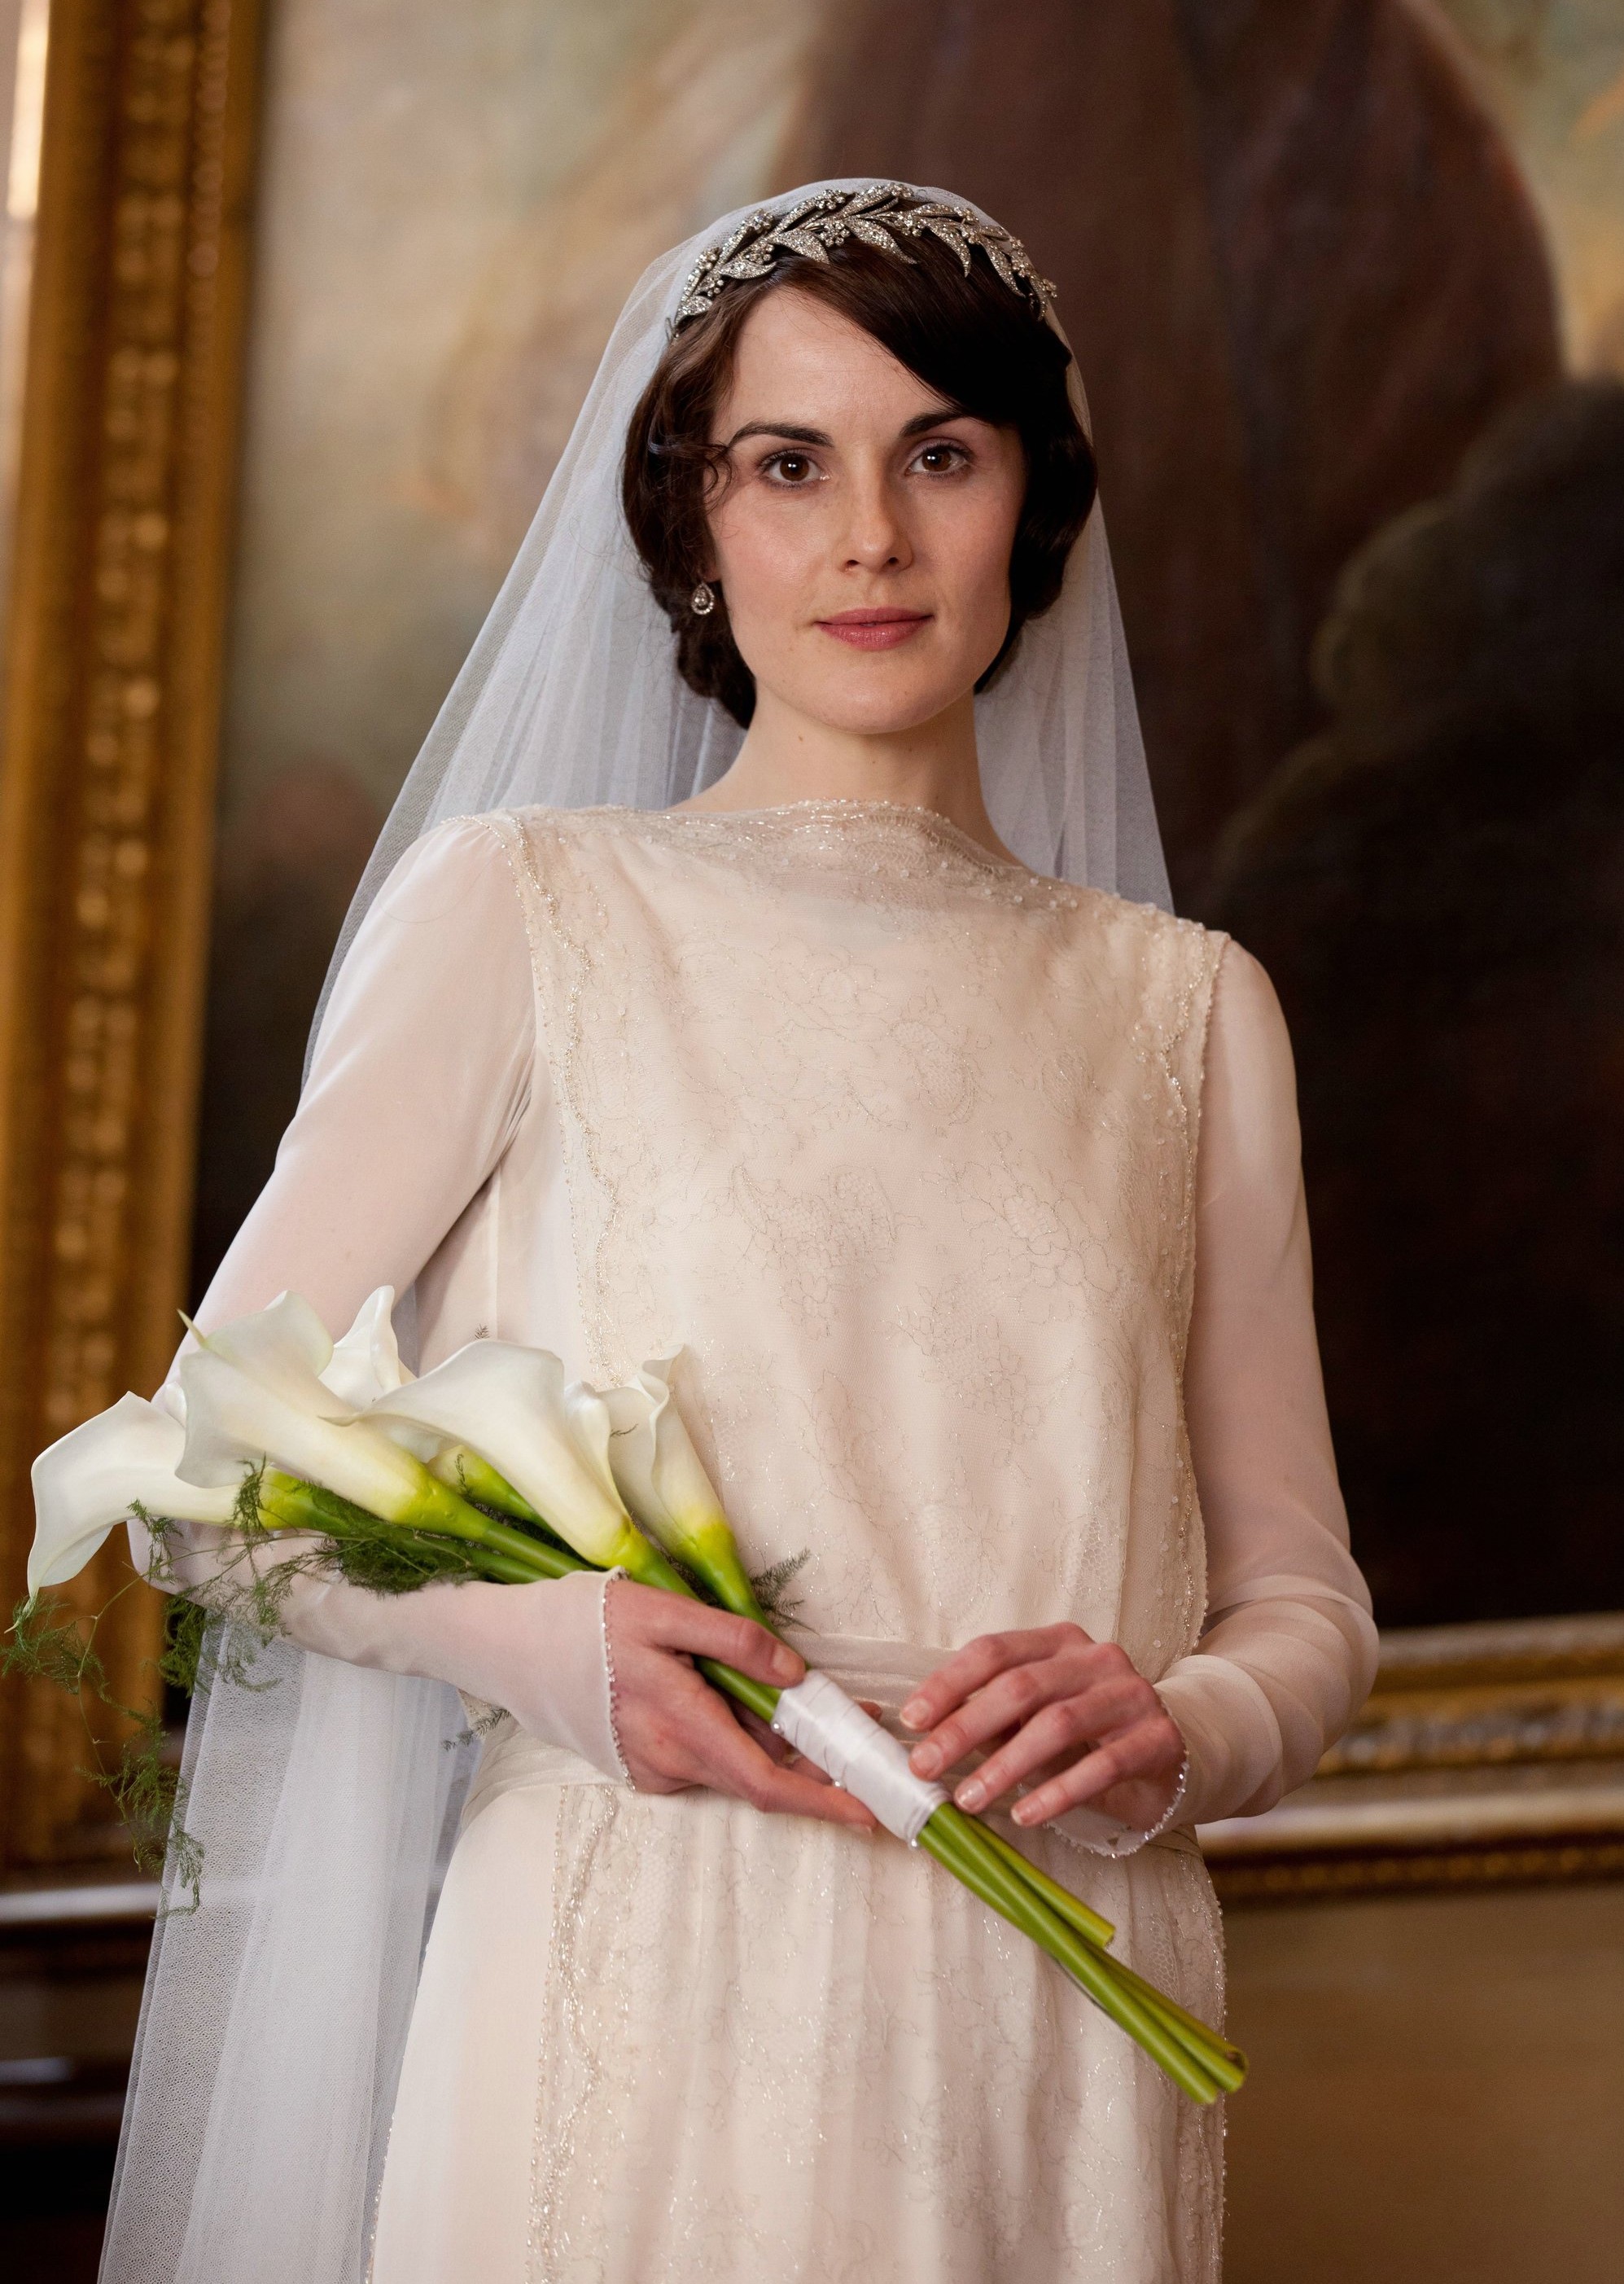 Downton Abbey Series 3 Wedding - Lady Mary's Wedding Dress, Bouquet and Tiara